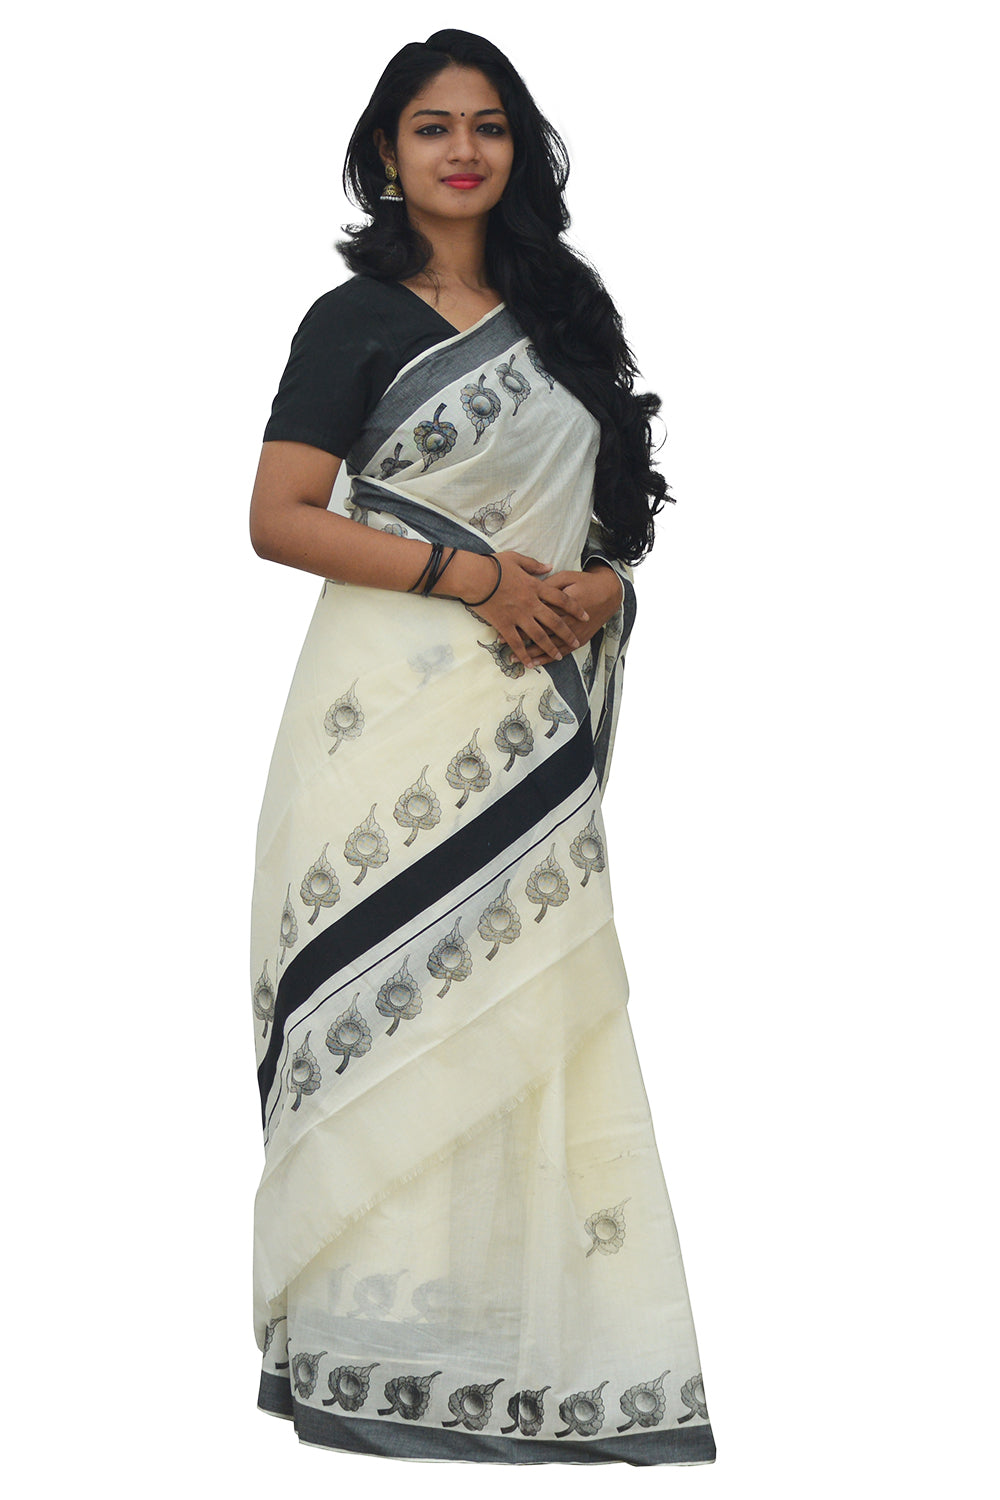 Kerala Saree with Black Leaf Block Print